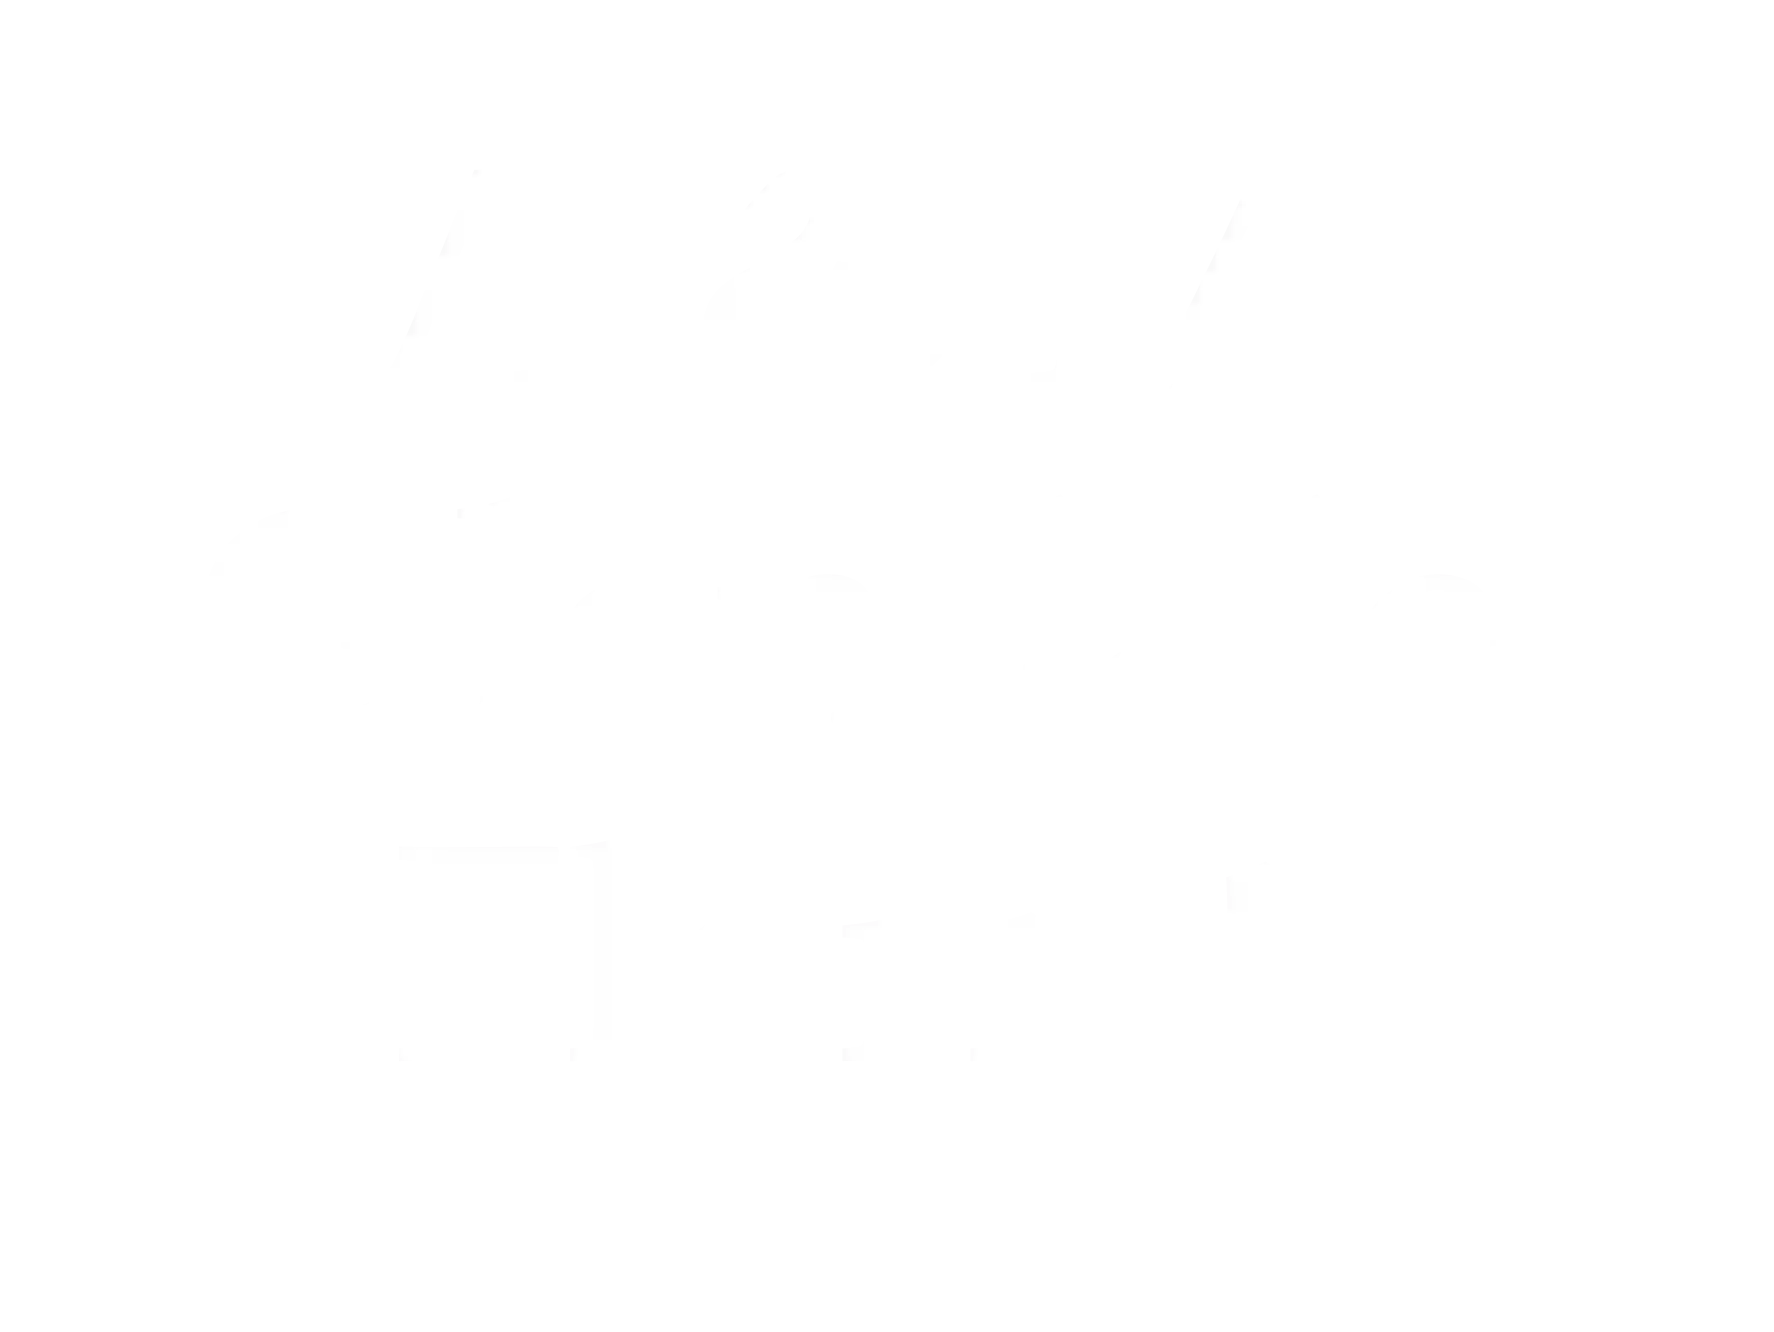 Glendale Florist